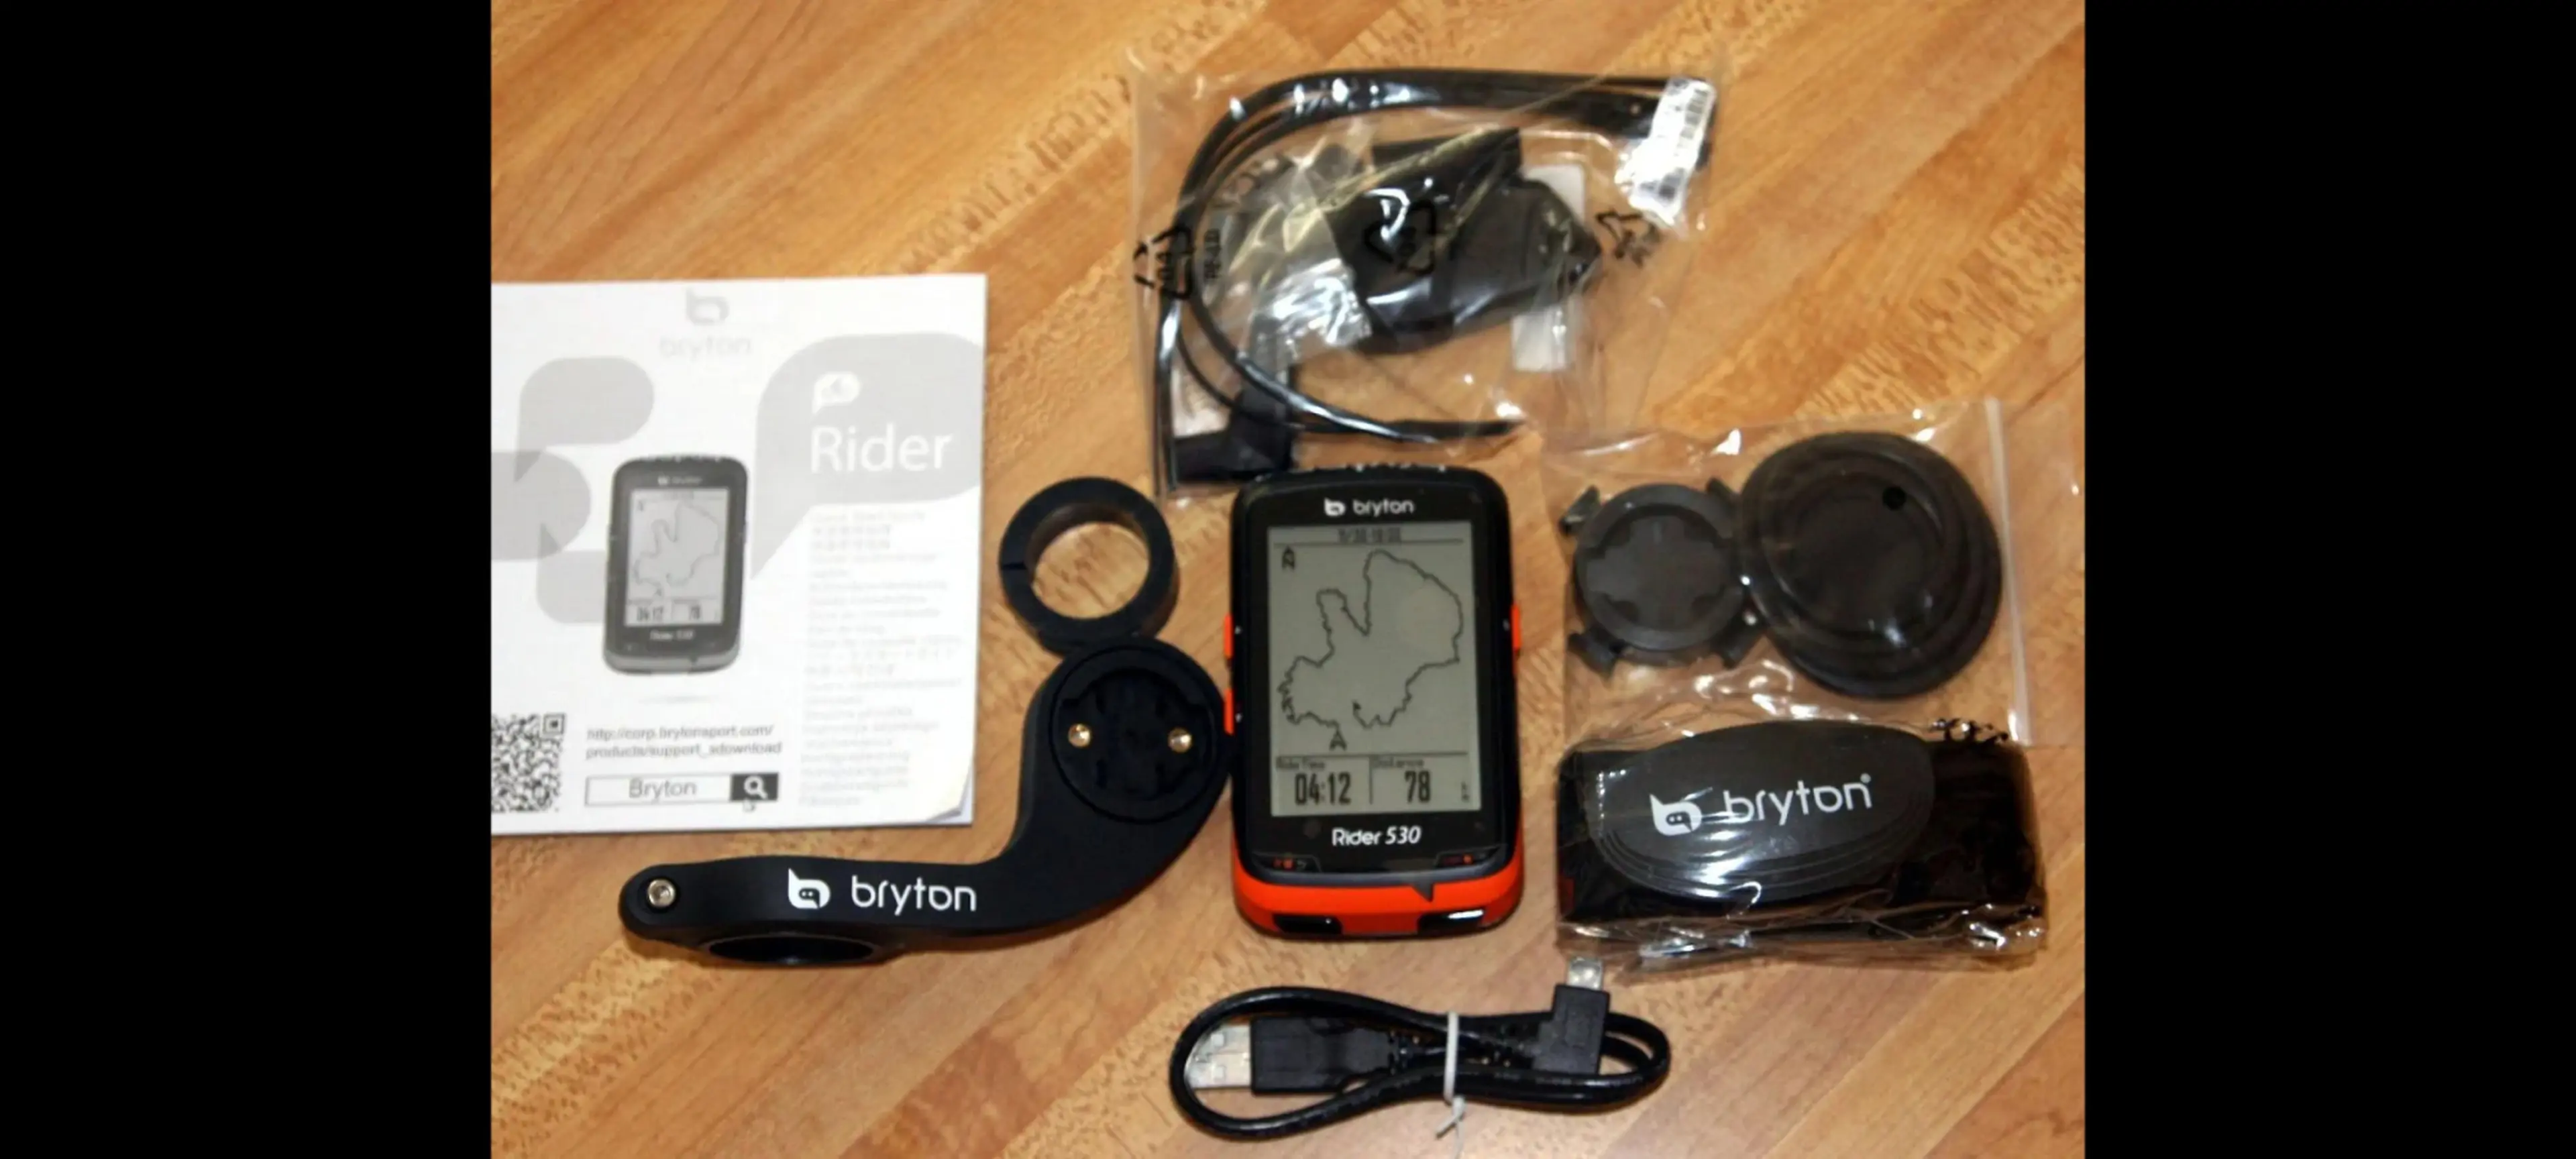 1. Ciclocomputer Bryton 530